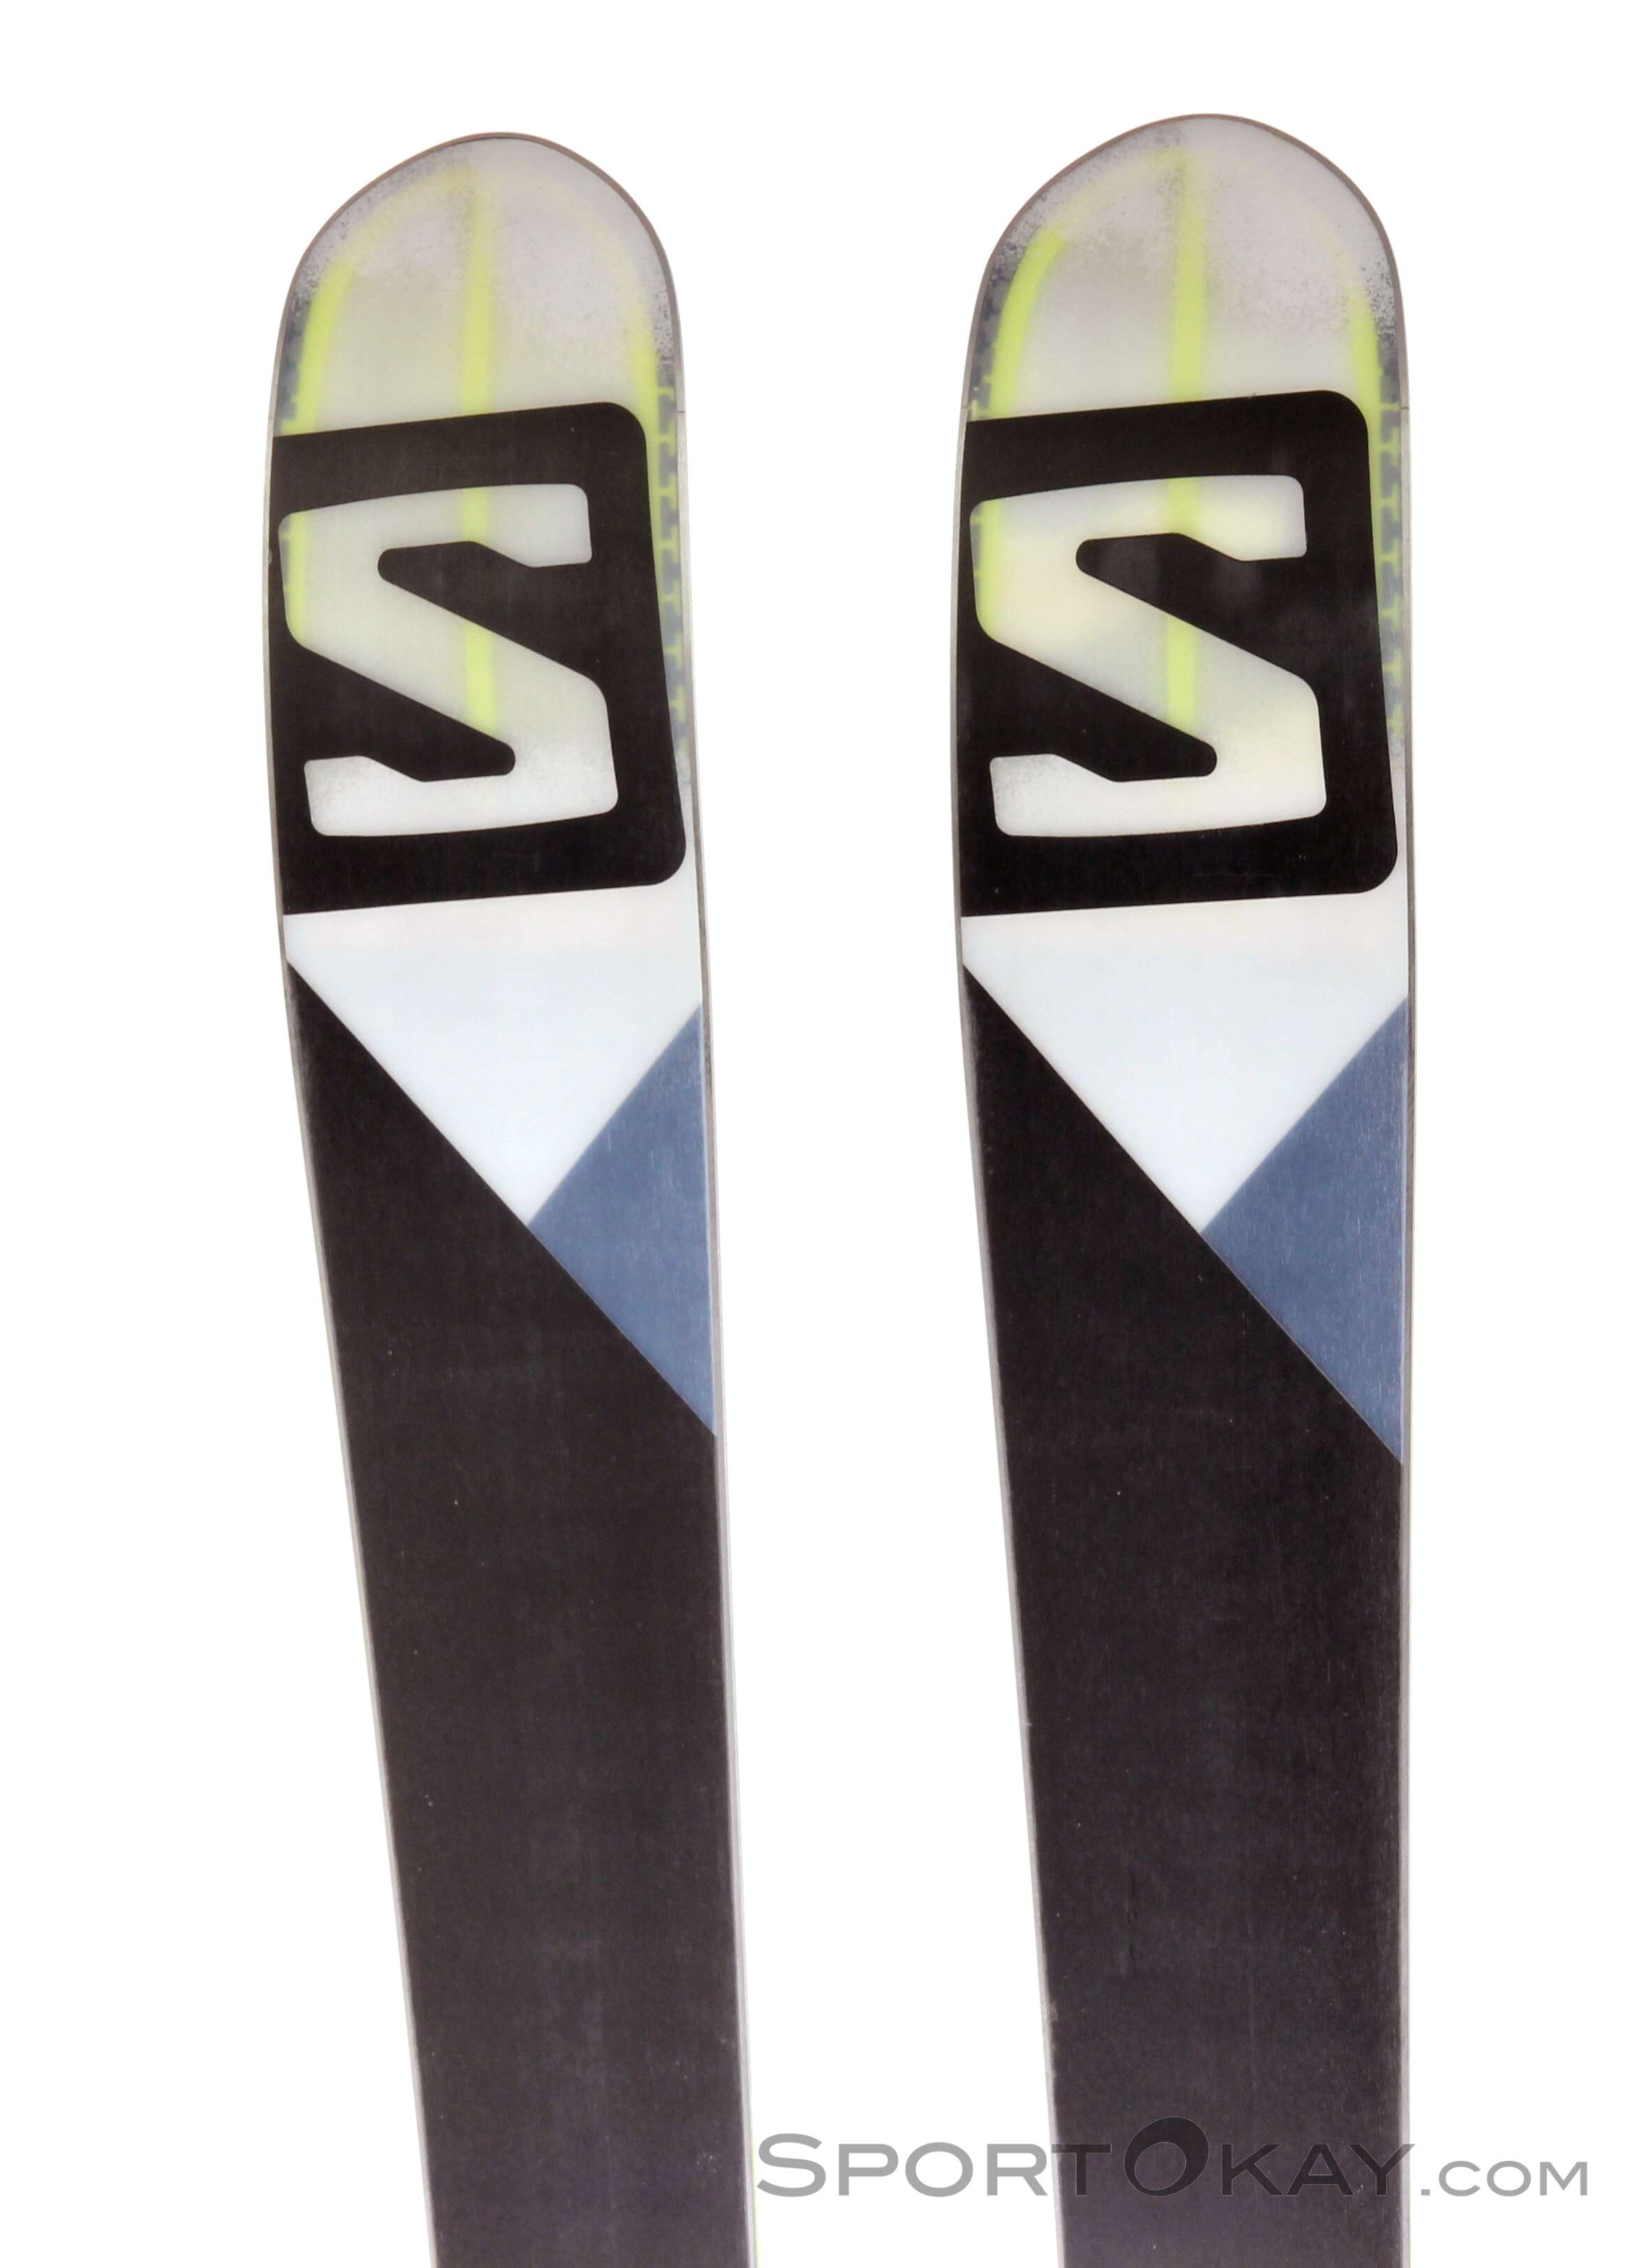 Salomon Quest 98 naked Freerideski - Freeride Skis - Skis - Ski